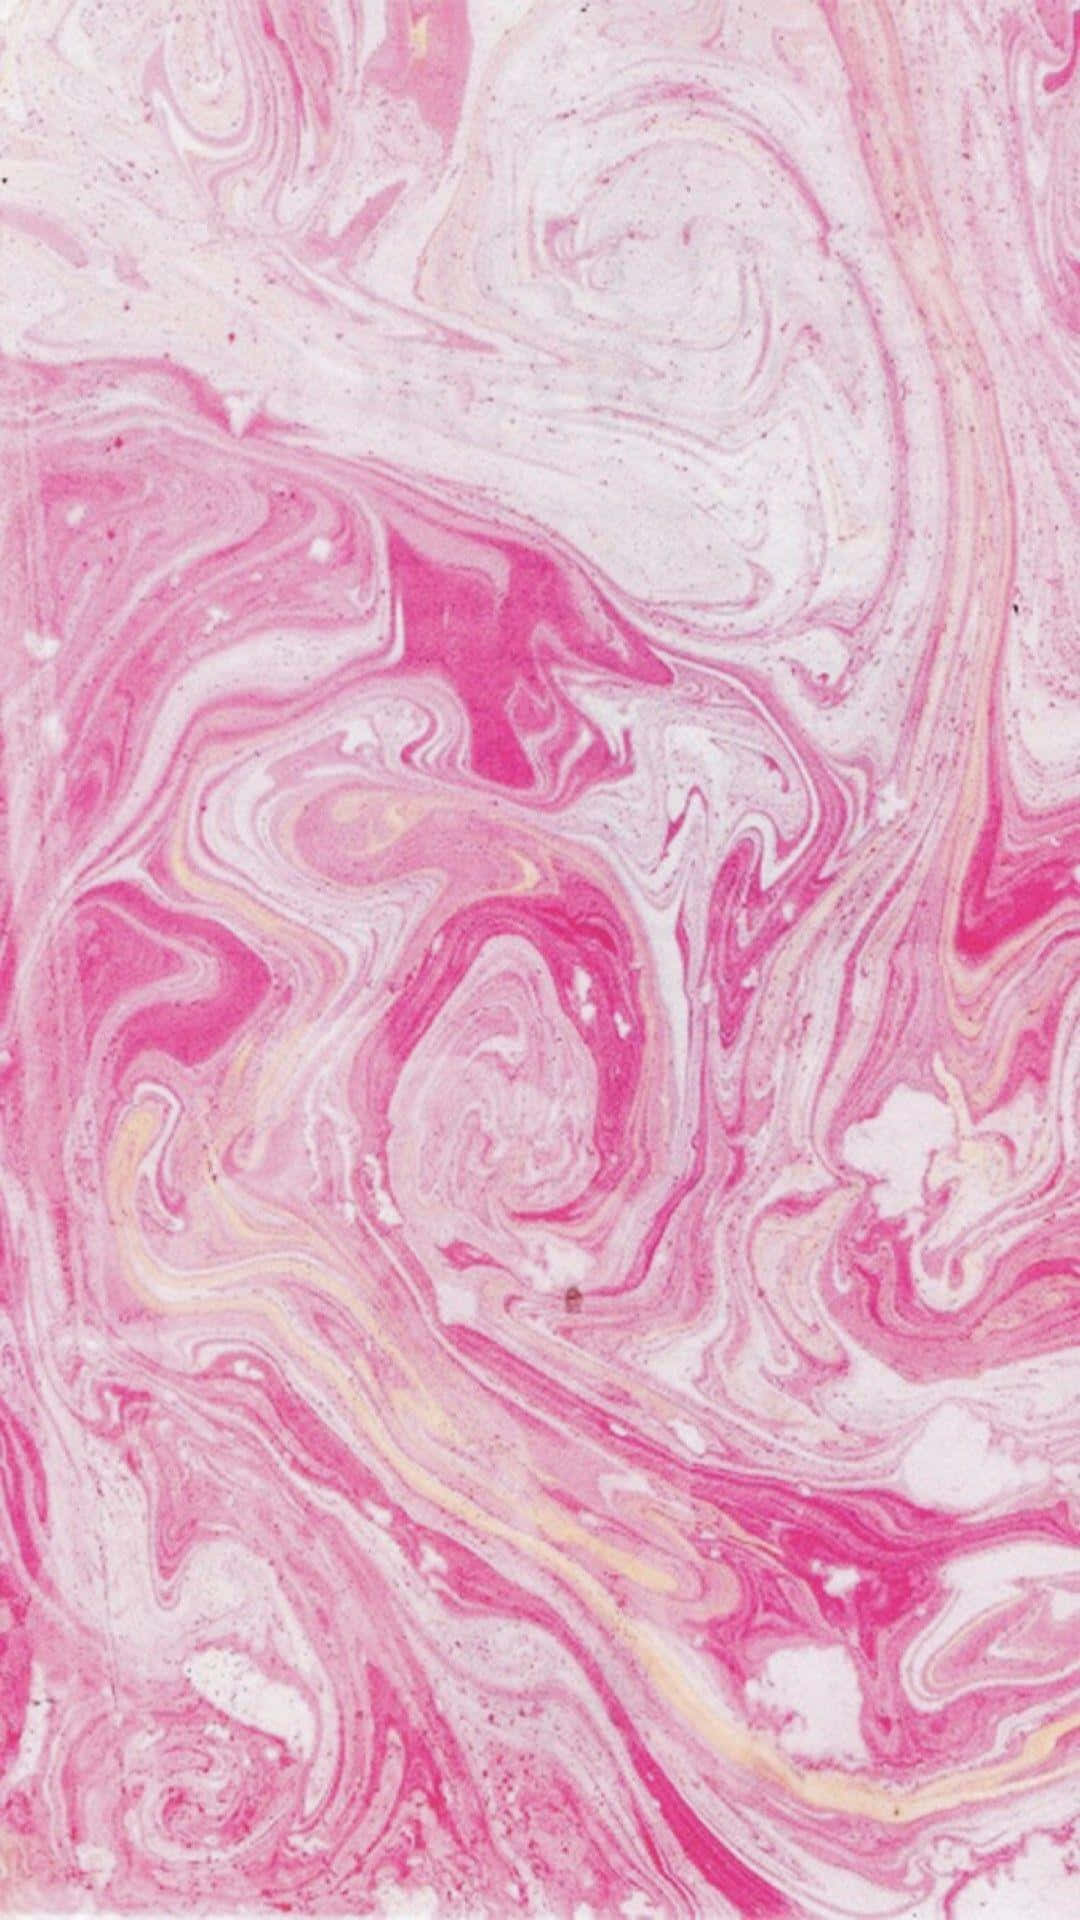 Marble Pink Aesthetic Tumblr Wallpaper